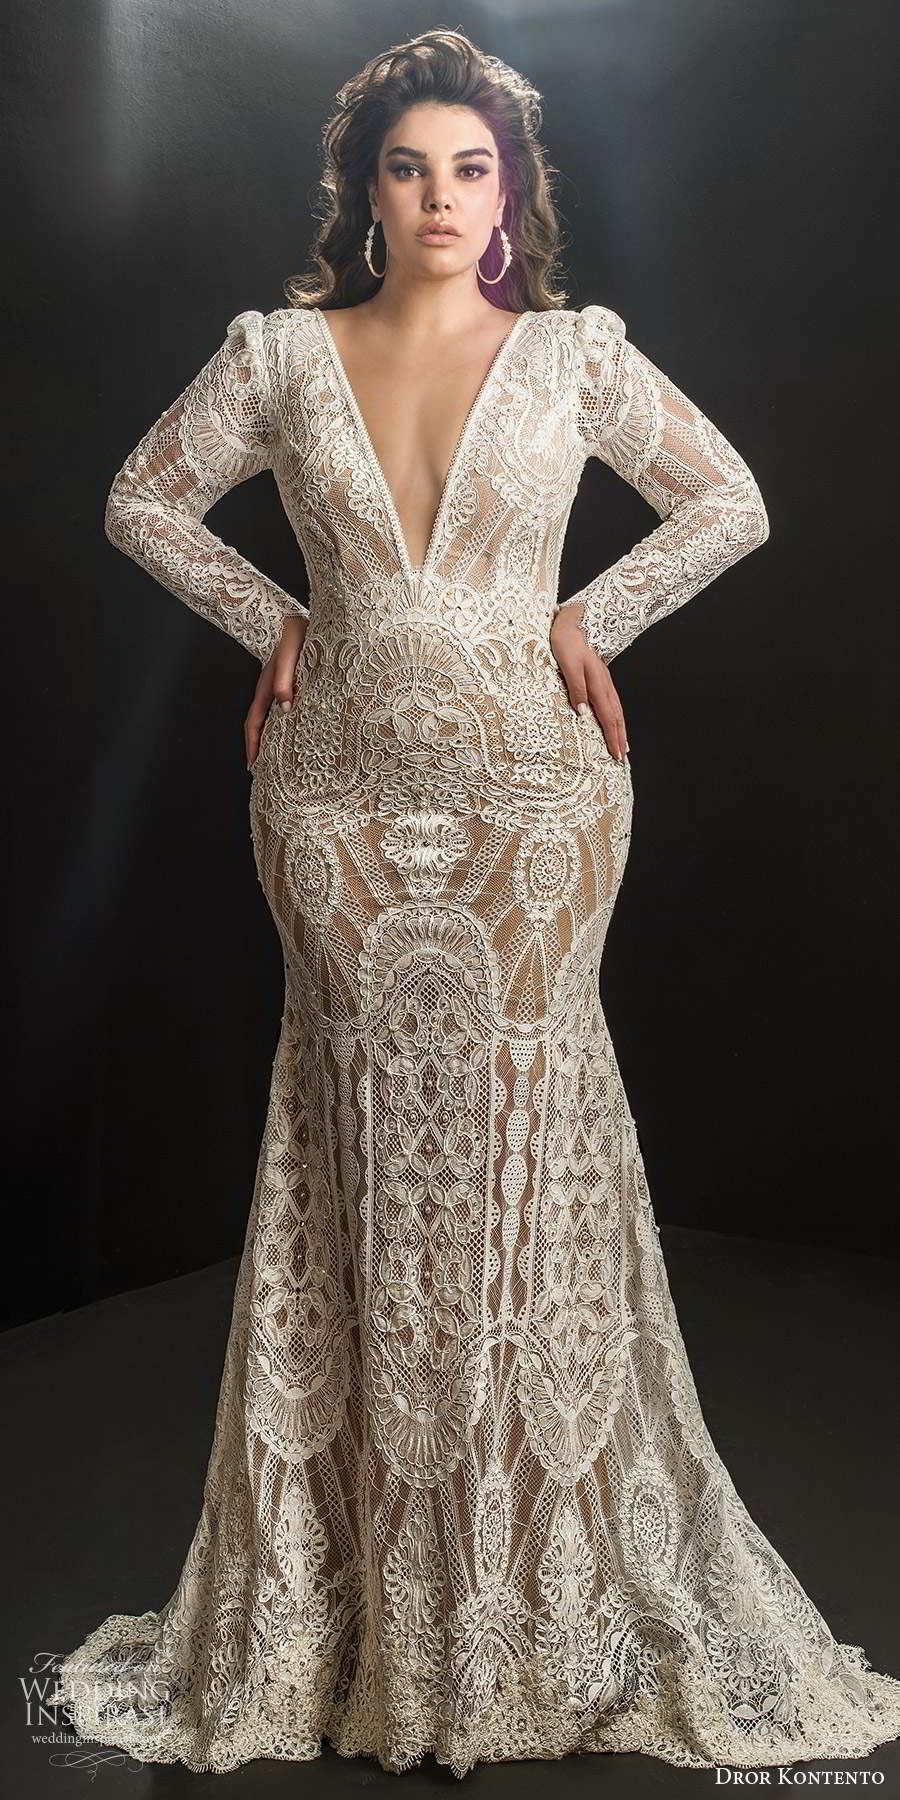 Dror Kontento 2019 Plus Size Wedding Dresses | Wedding Inspirasi -   16 dress Wedding neckline ideas